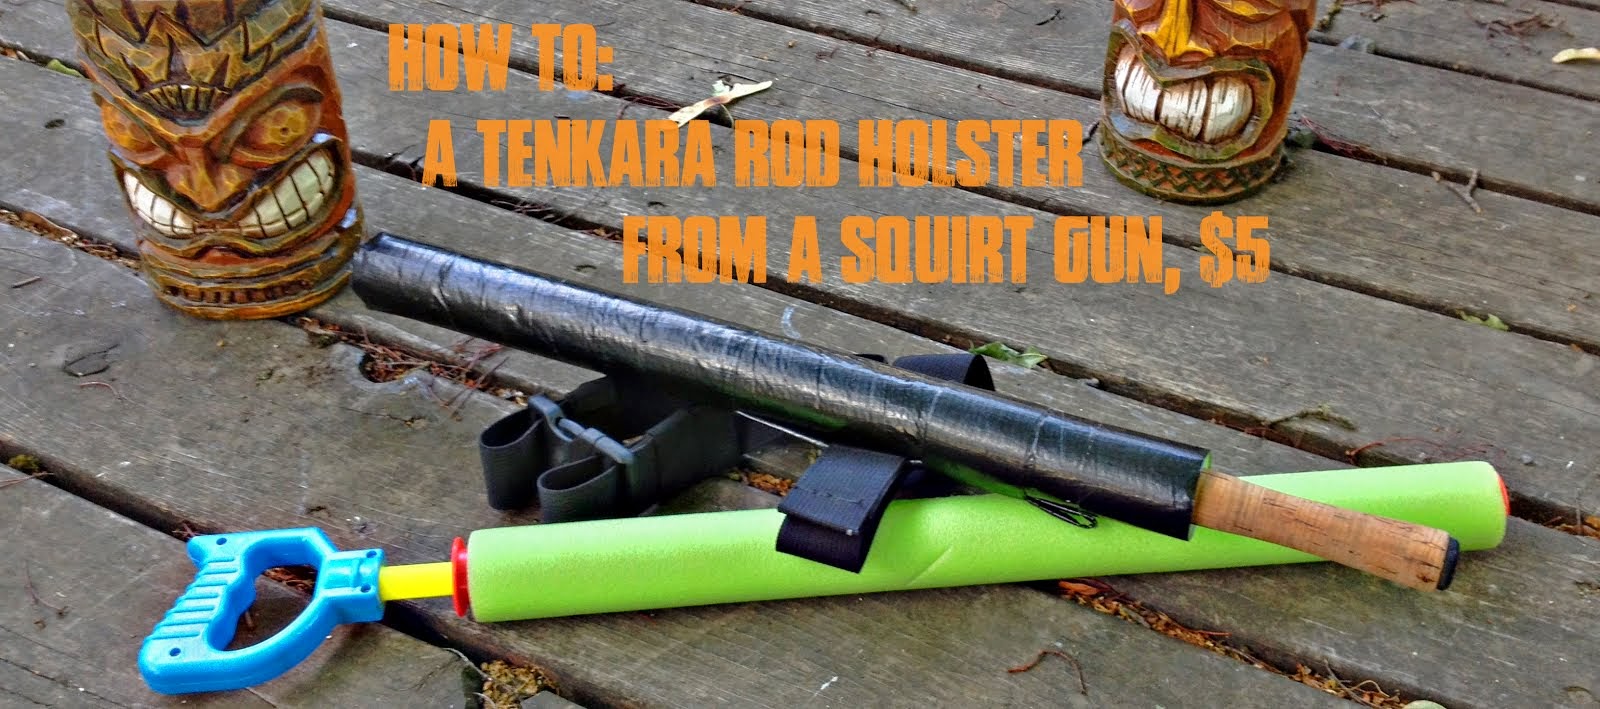 How to: Tenkara rod case from a squirt gun